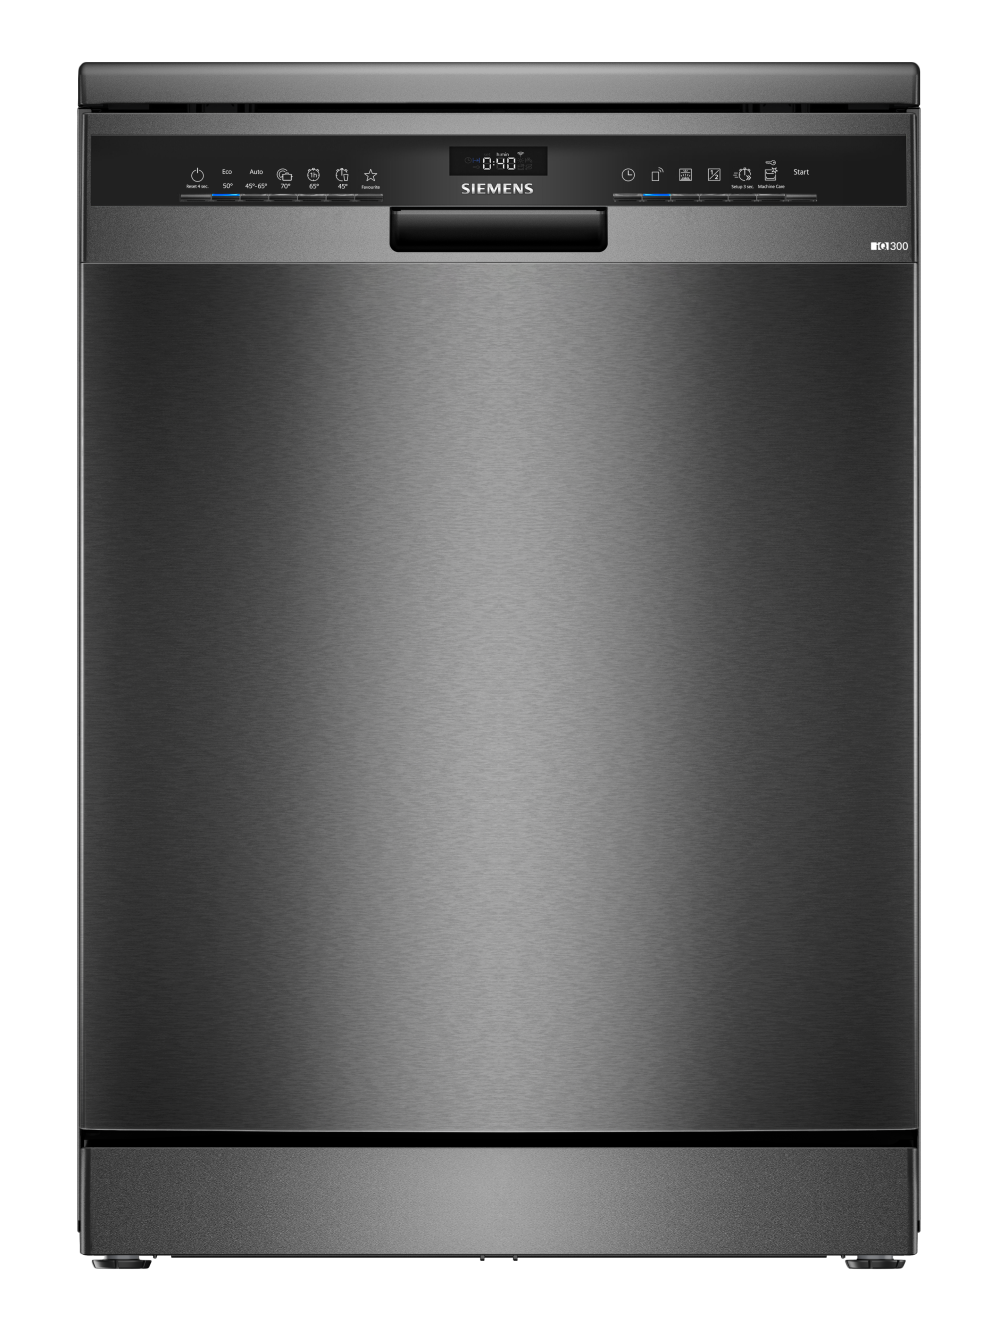 Siemens SN23EC03ME iQ300 Freestanding Dishwasher featured image